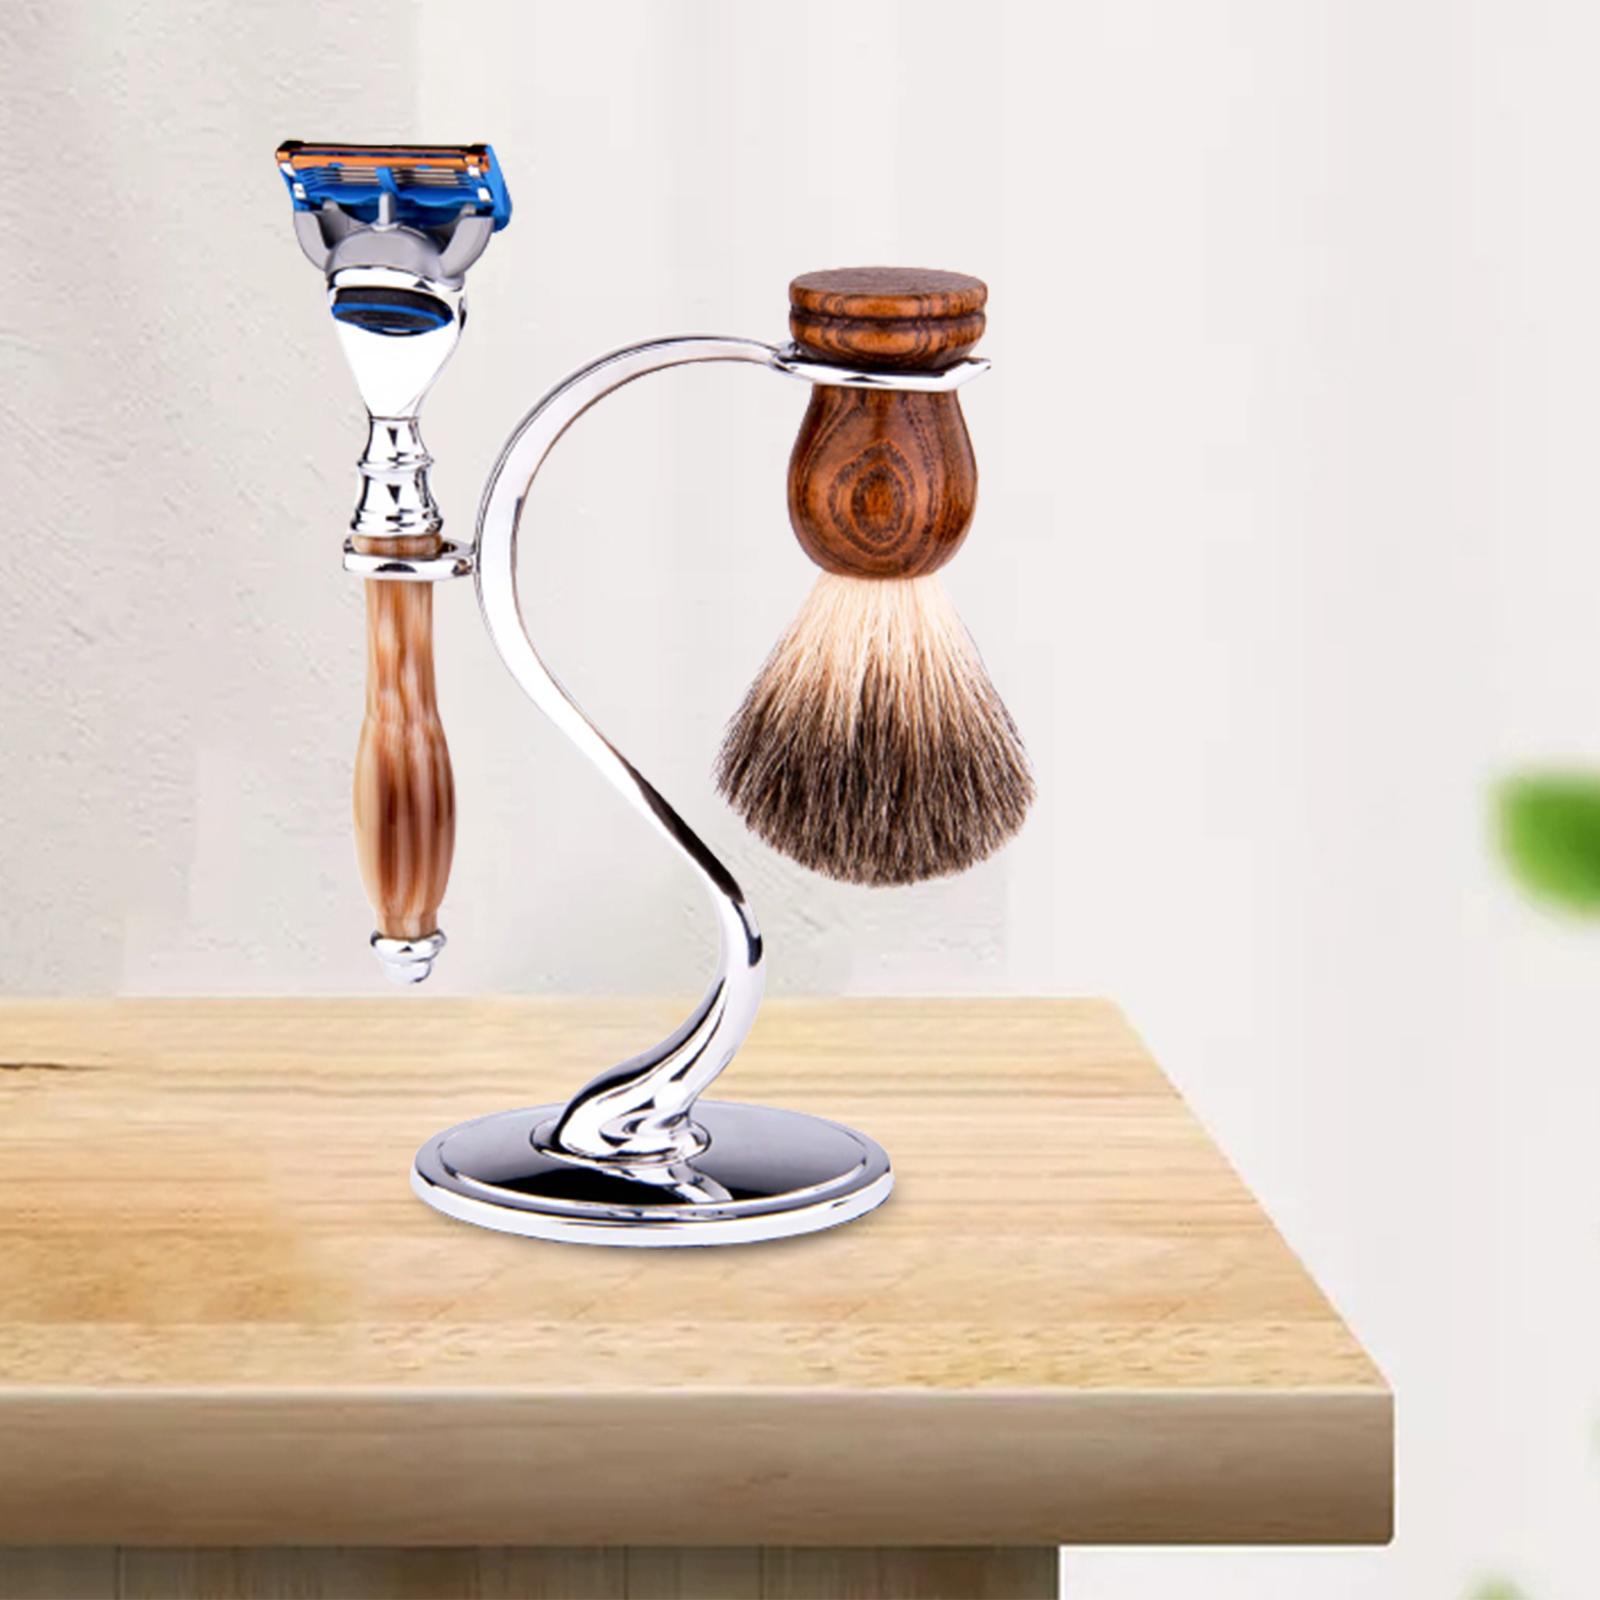 Razor and Shaving Brush Stand Holder for Double Edge Safety Razor Salon Home